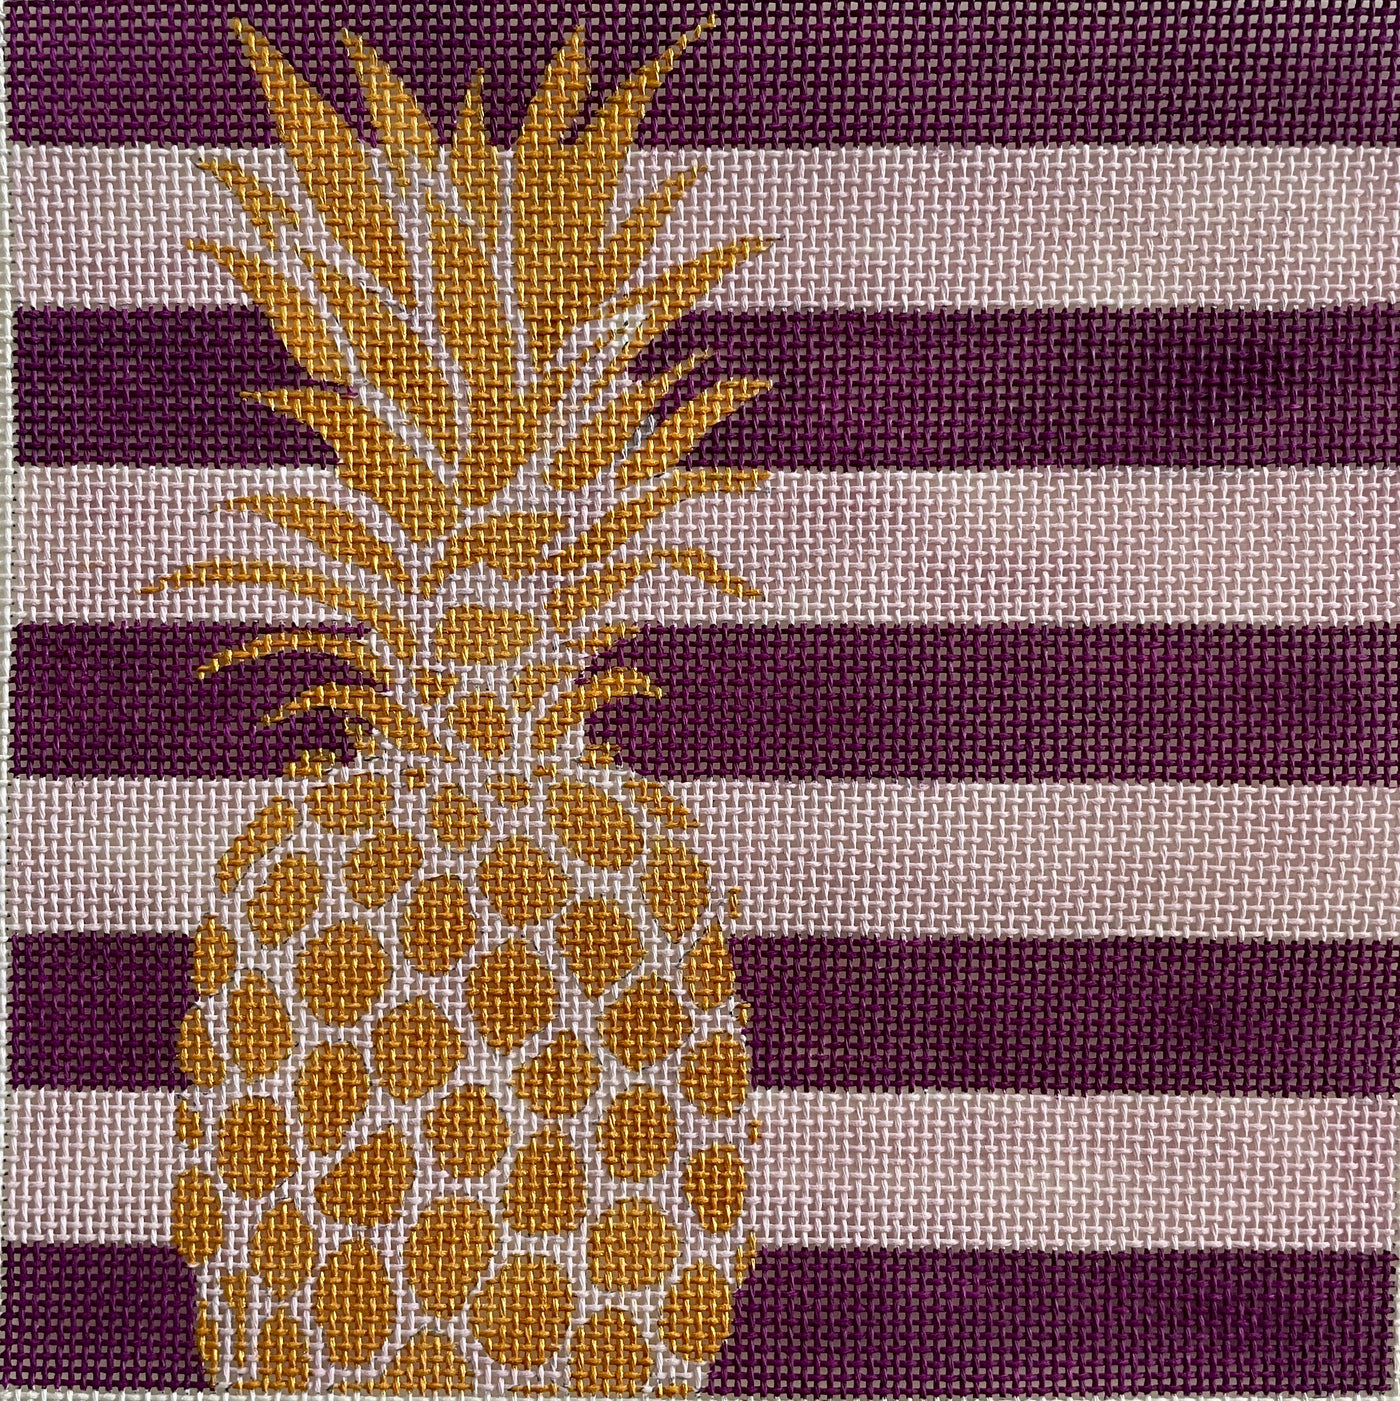 Gold Coast Pineapple Pinkand Purple Stripes Needlepoint Canvas